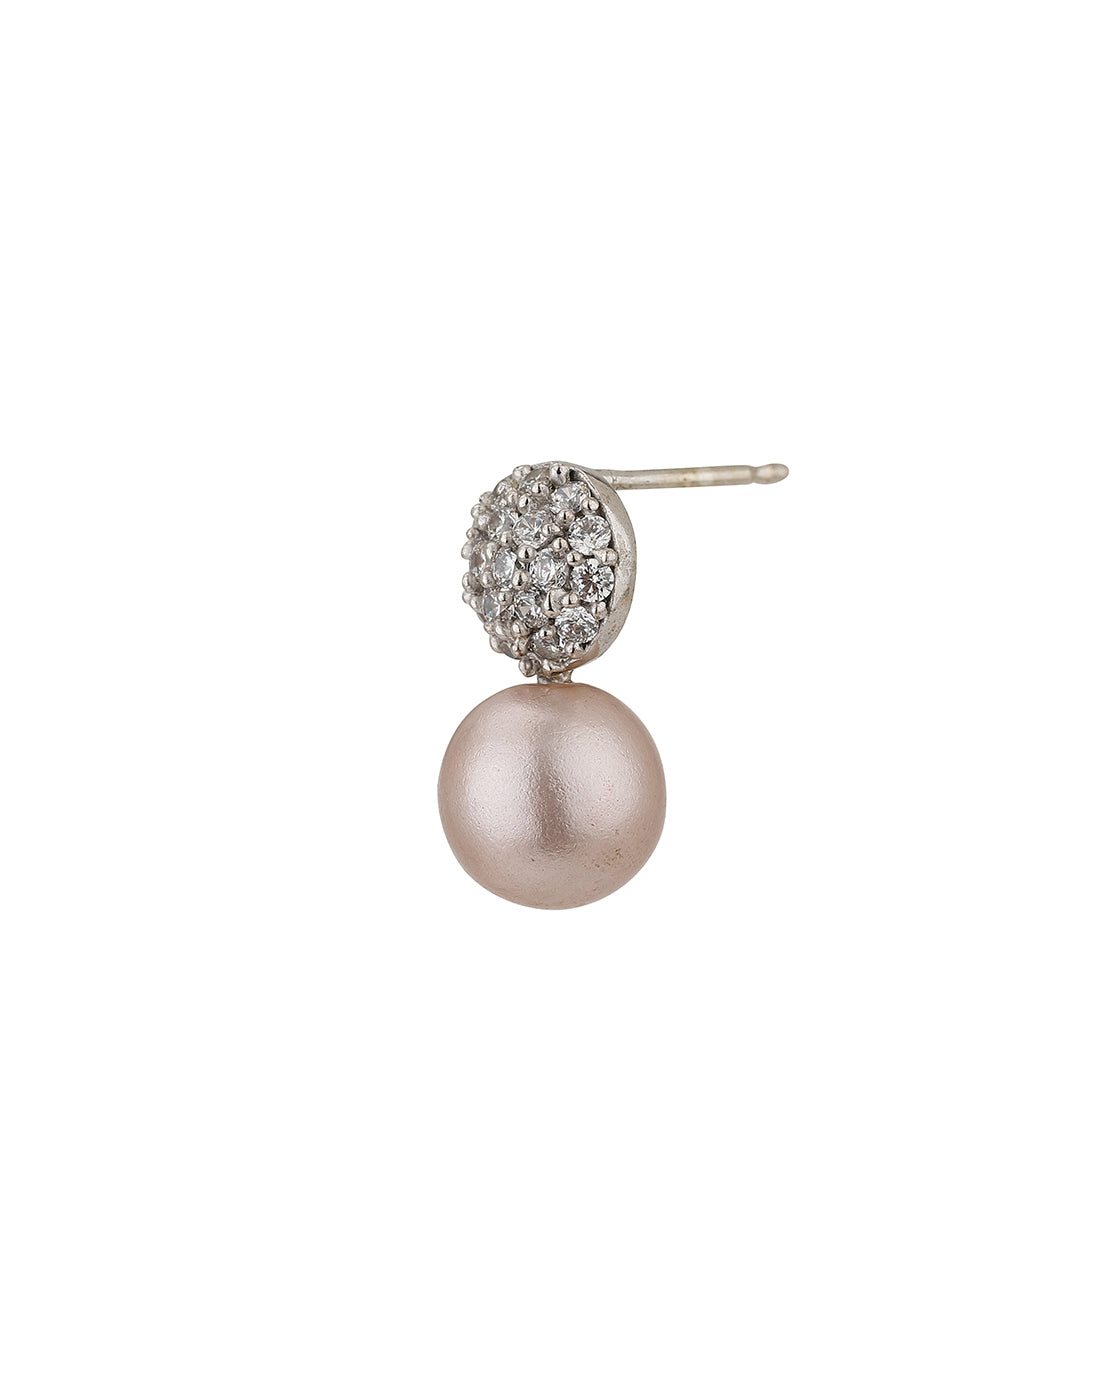 Top more than 128 rose gold pearl earrings stud best